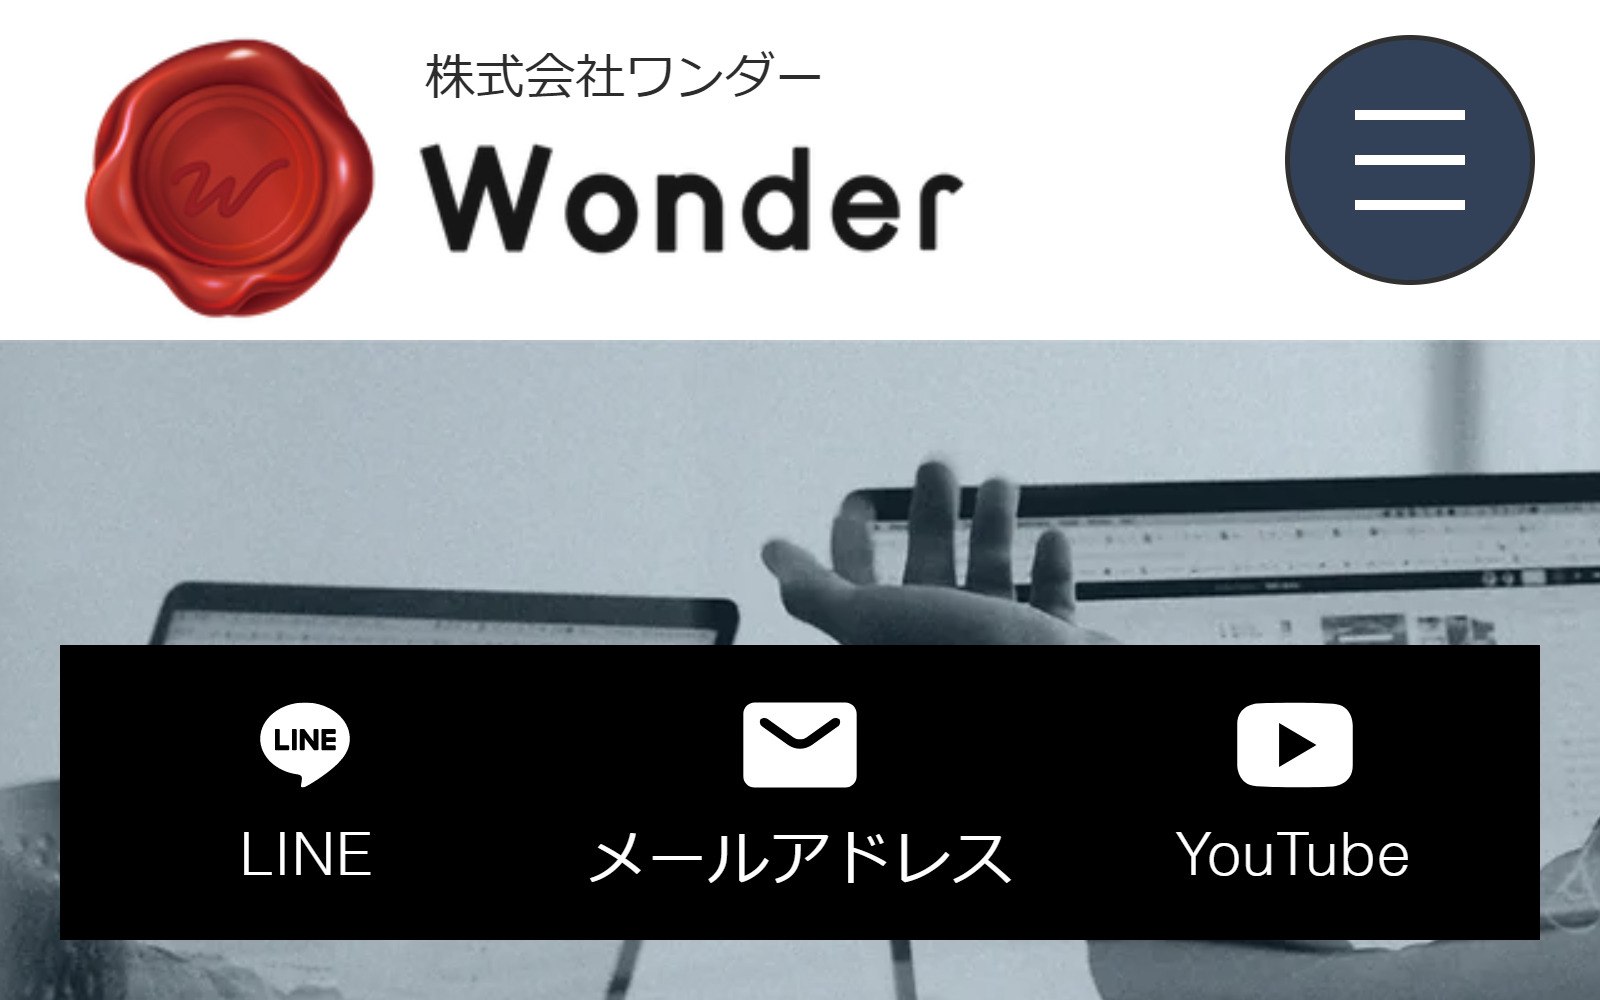 株式会社Wonder